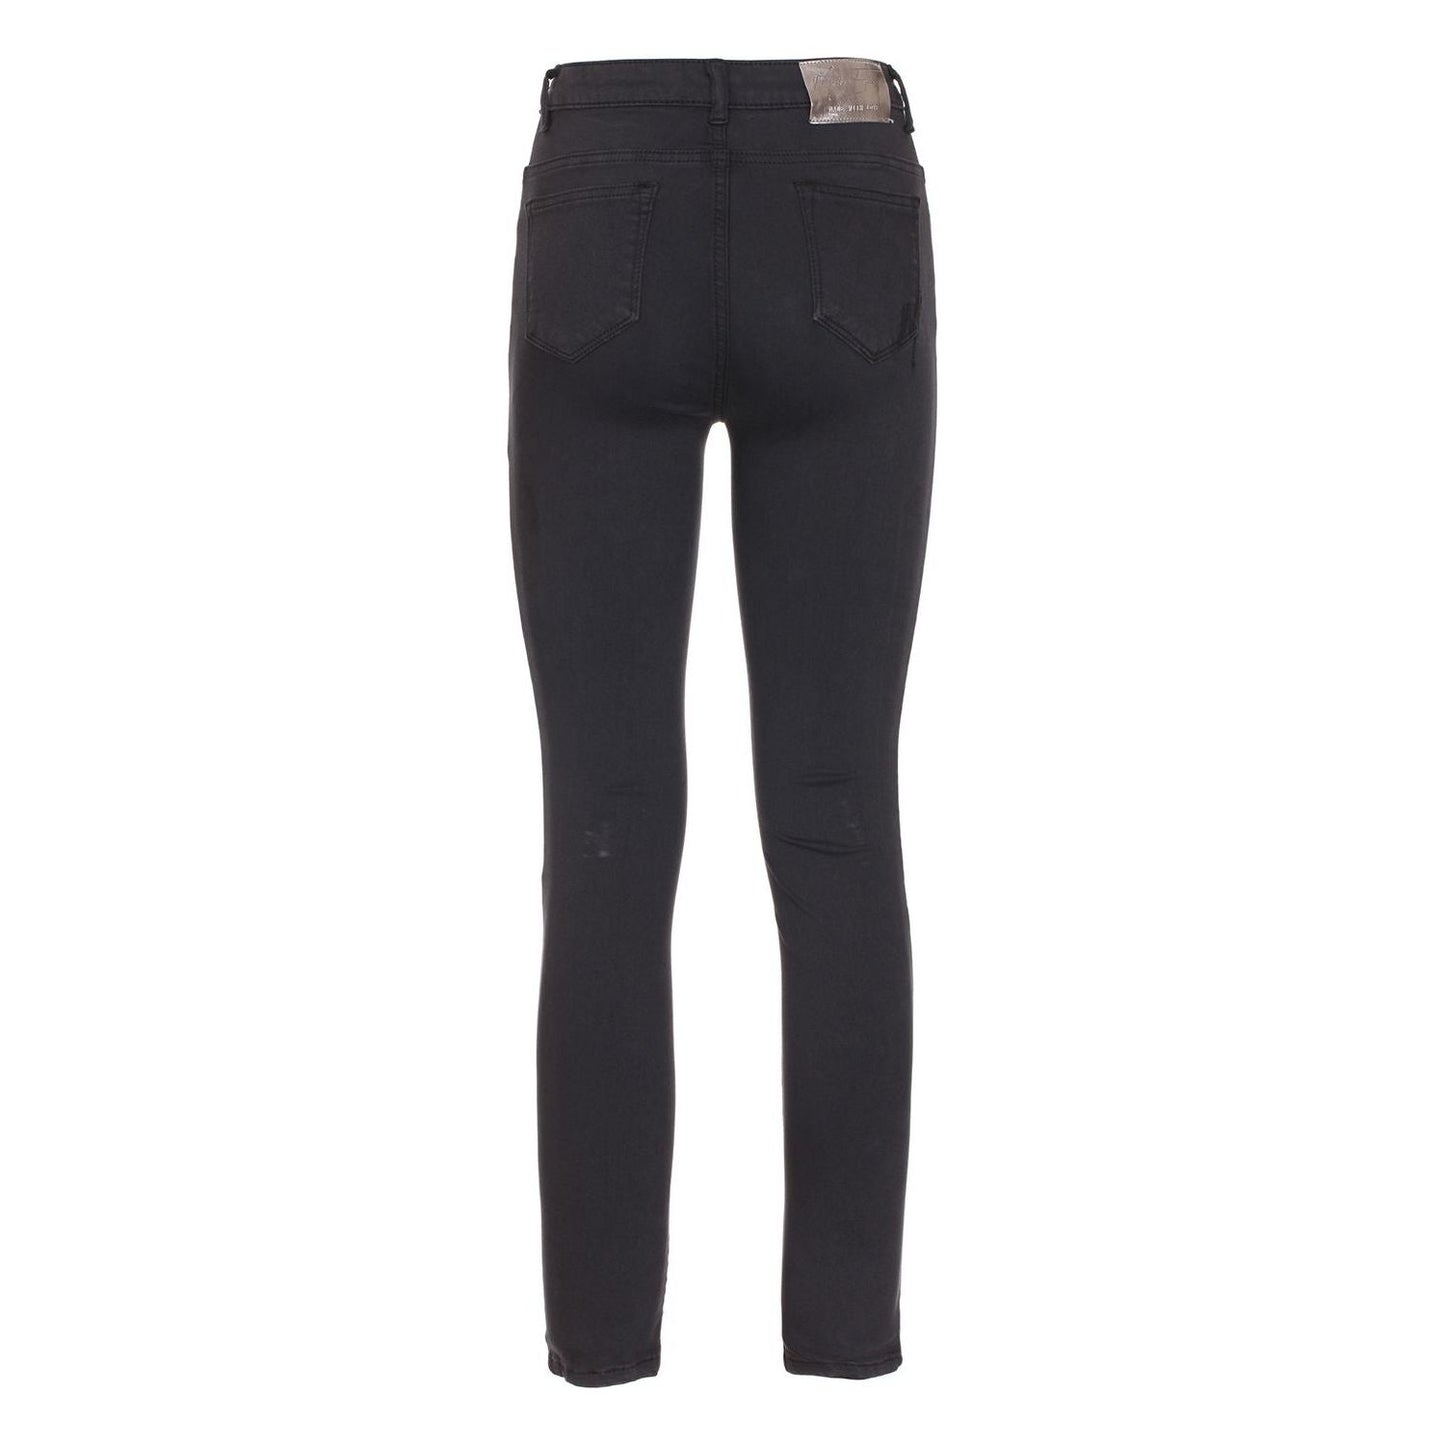 Maison Espin Chic High-Waist Super Skinny Olivia Pants Jeans & Pants black-cotton-jeans-pant-1 stock_product_image_1648_1268719736-34a5c54b-32b.jpg